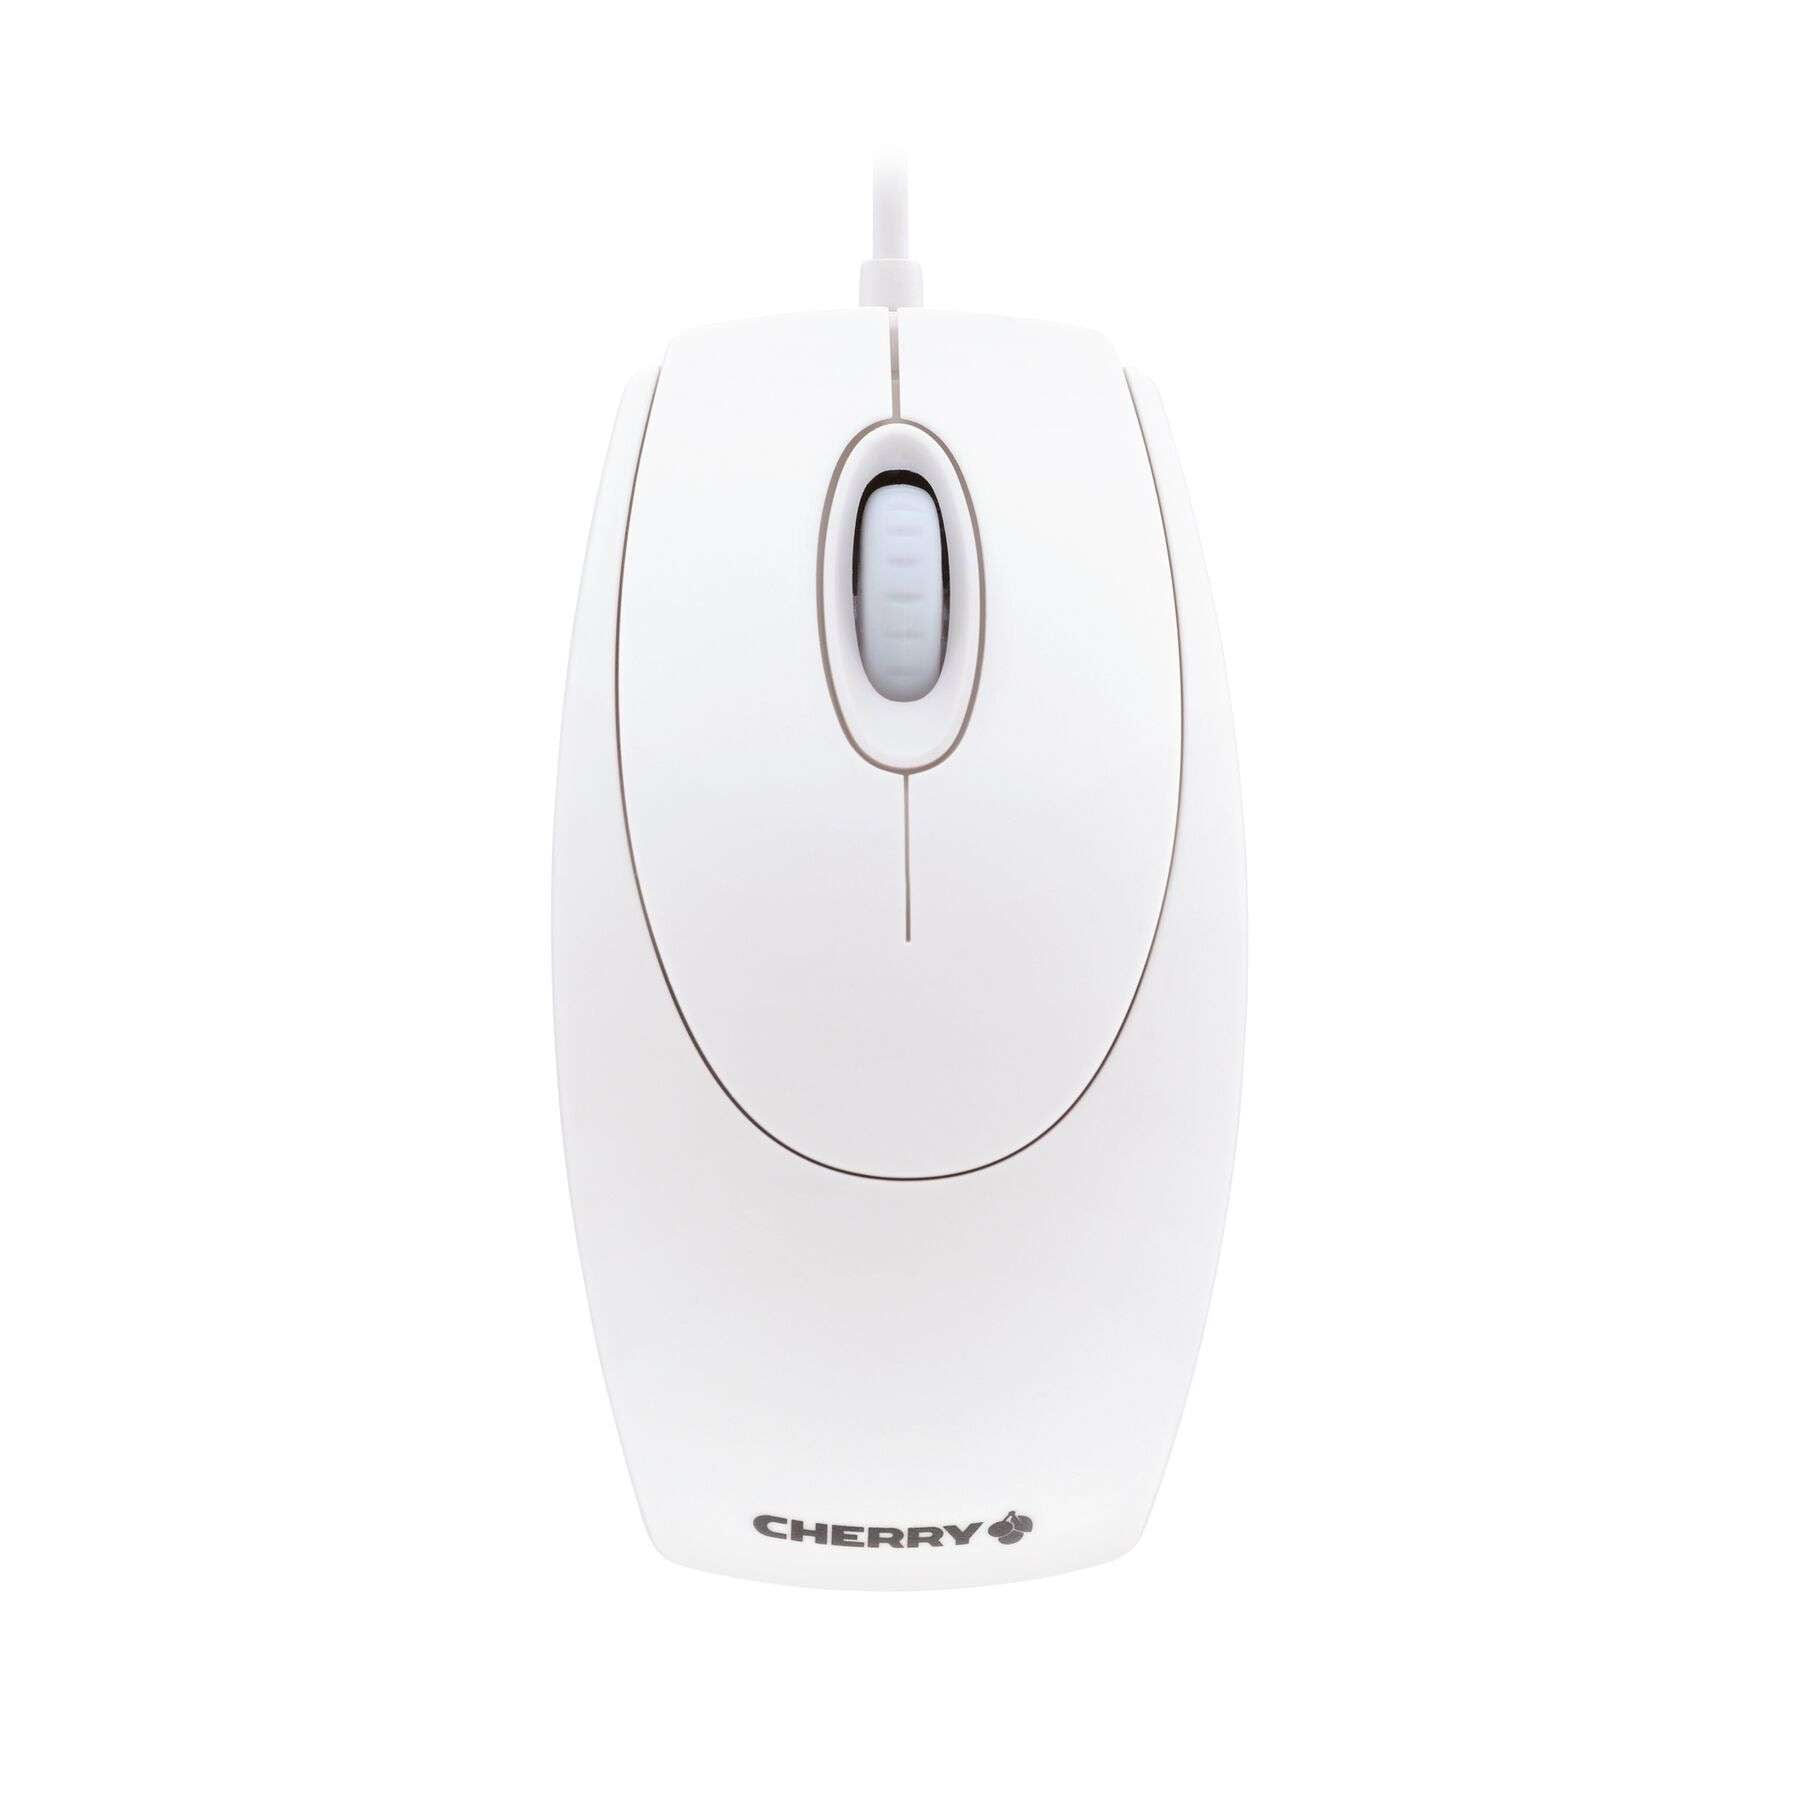 Cherry Maus »WHEELMOUSE OPTICAL Kabelgebundene Maus, Weiß Grau, PS2/USB«